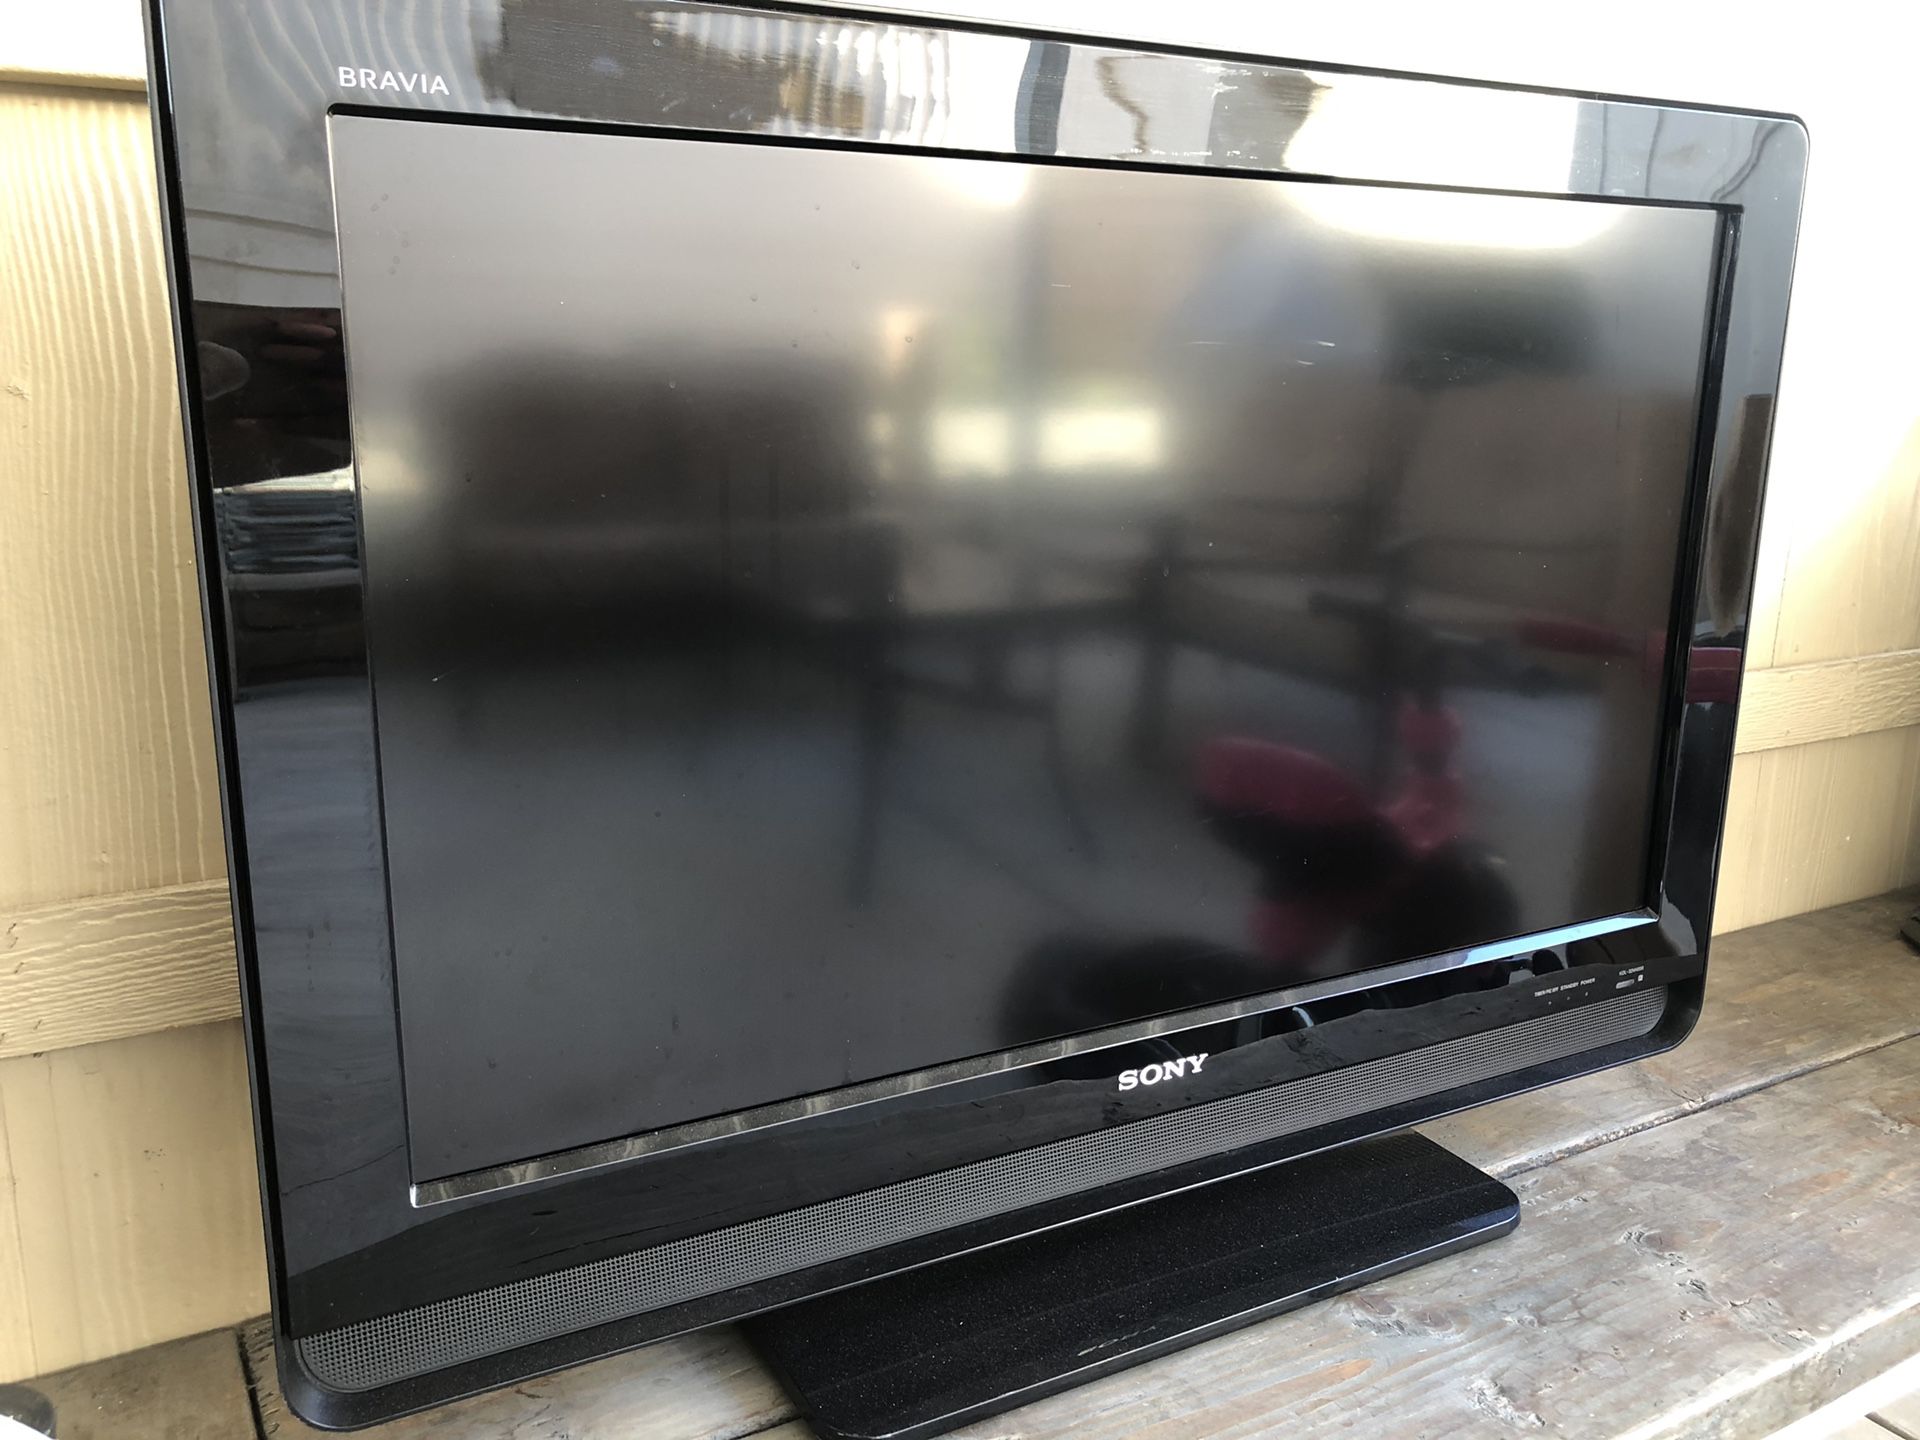 Sony 32” LCD Tv